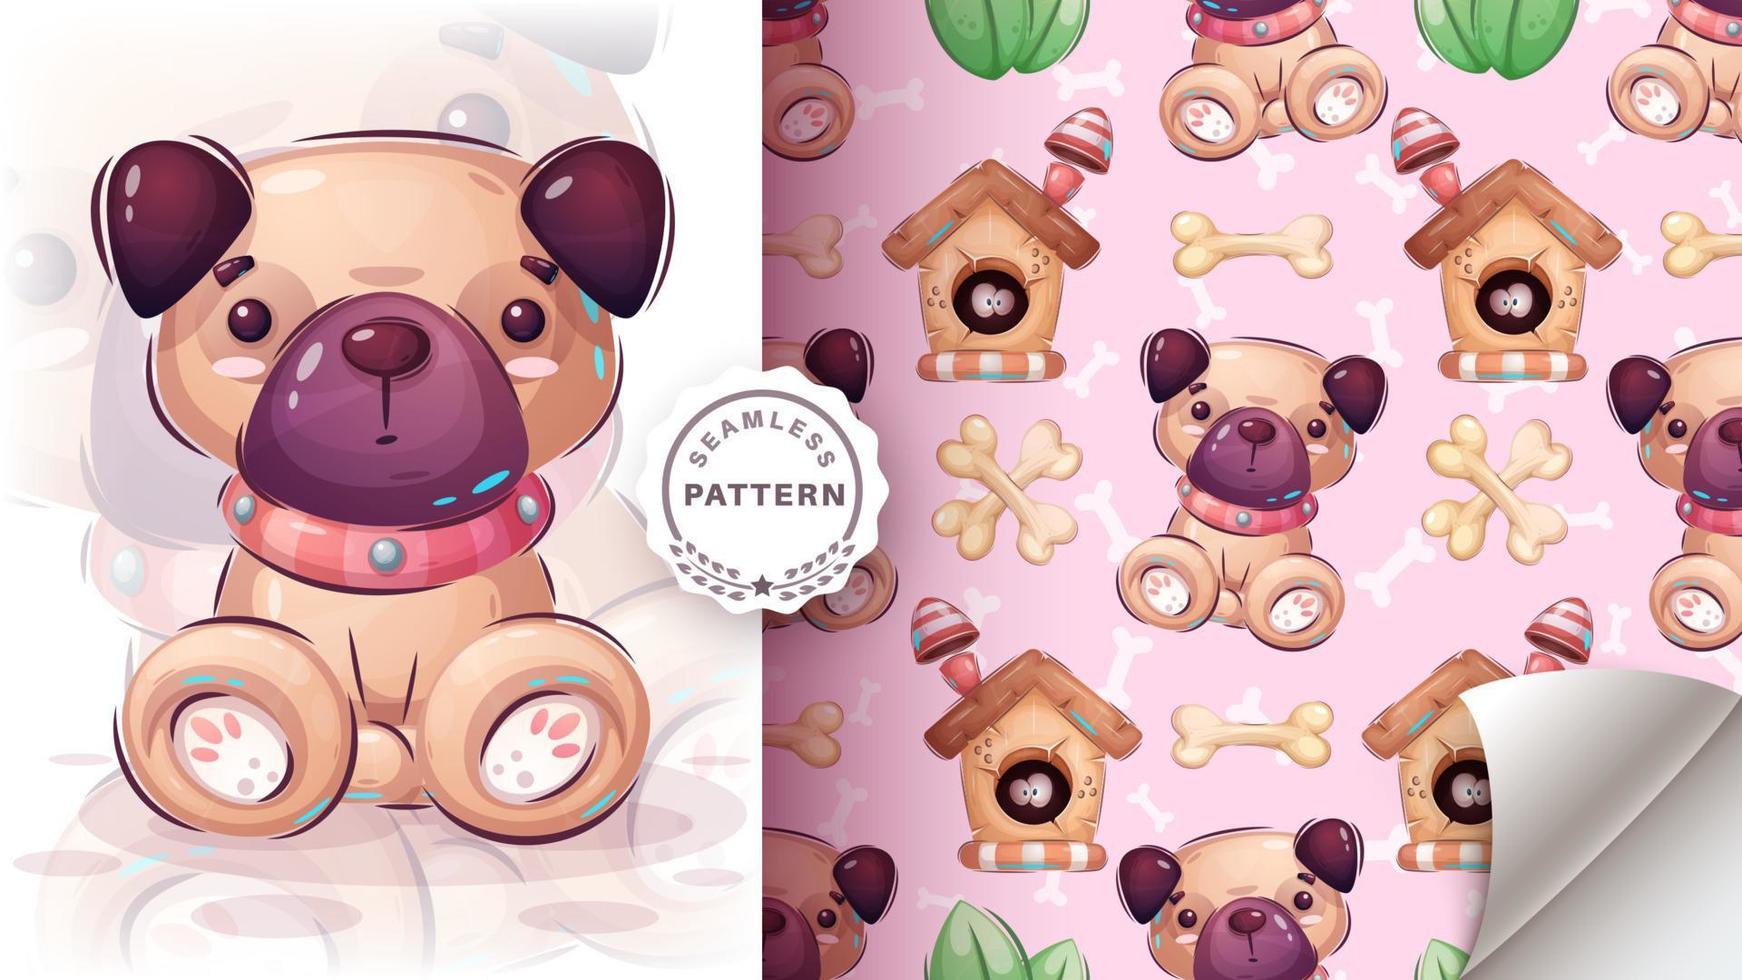 Cartoon character pug dog - seamless pattern vector